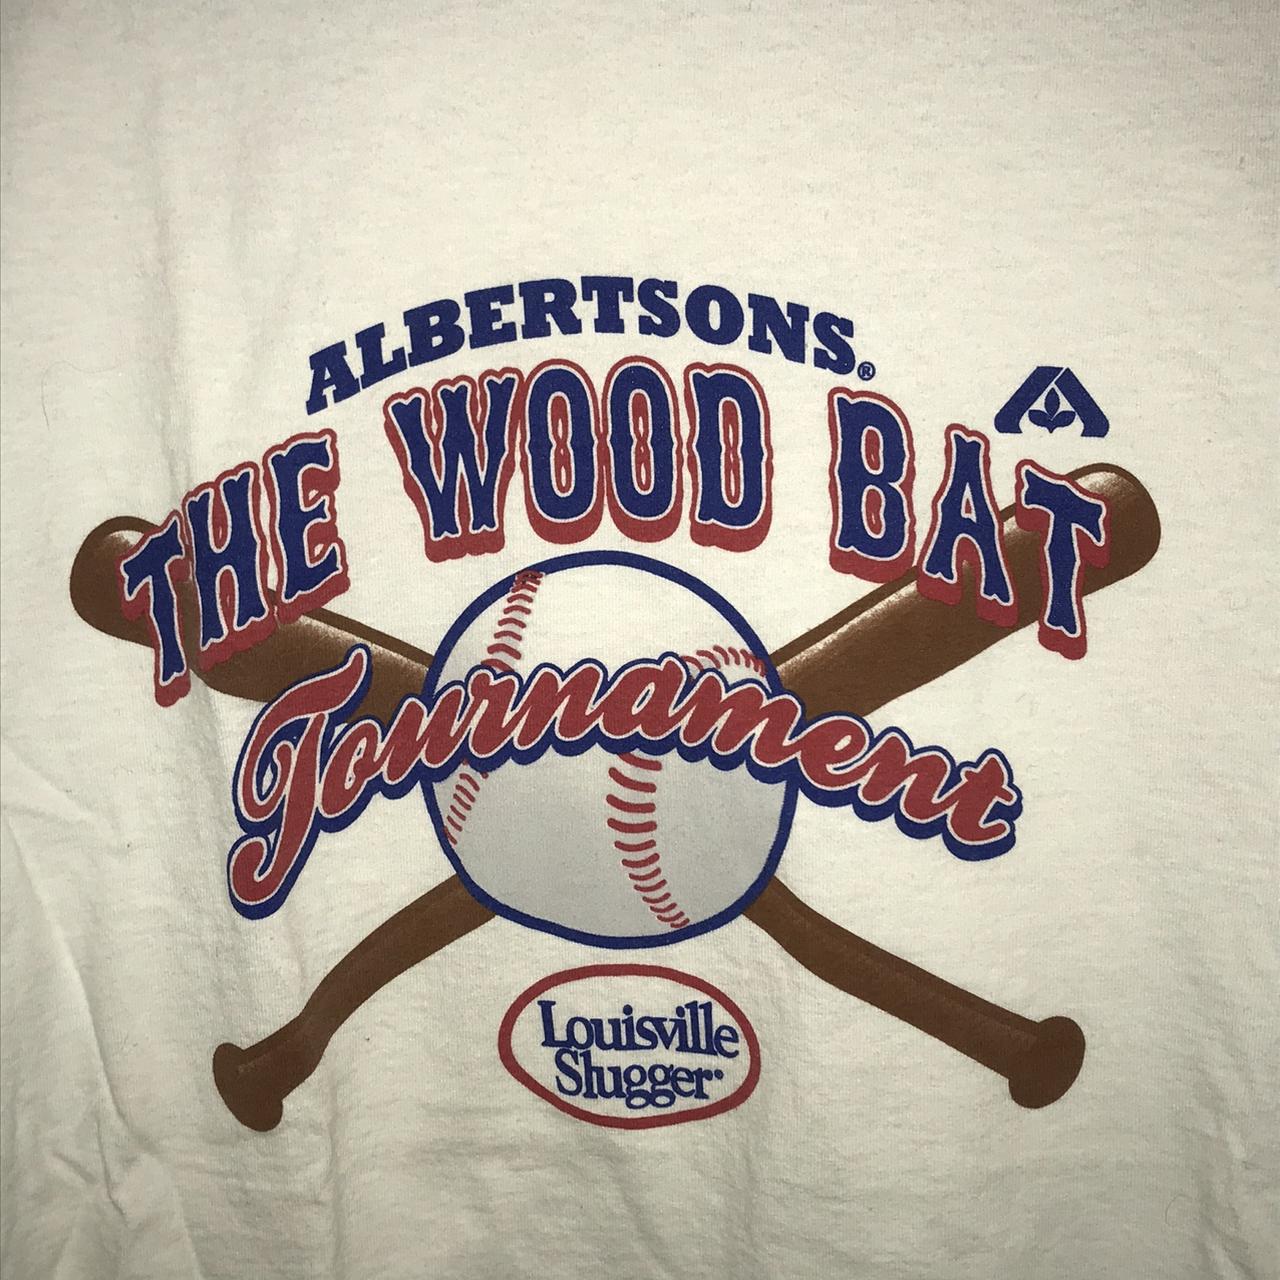 Louisville slugger Baseball Softball Men's T-Shirt